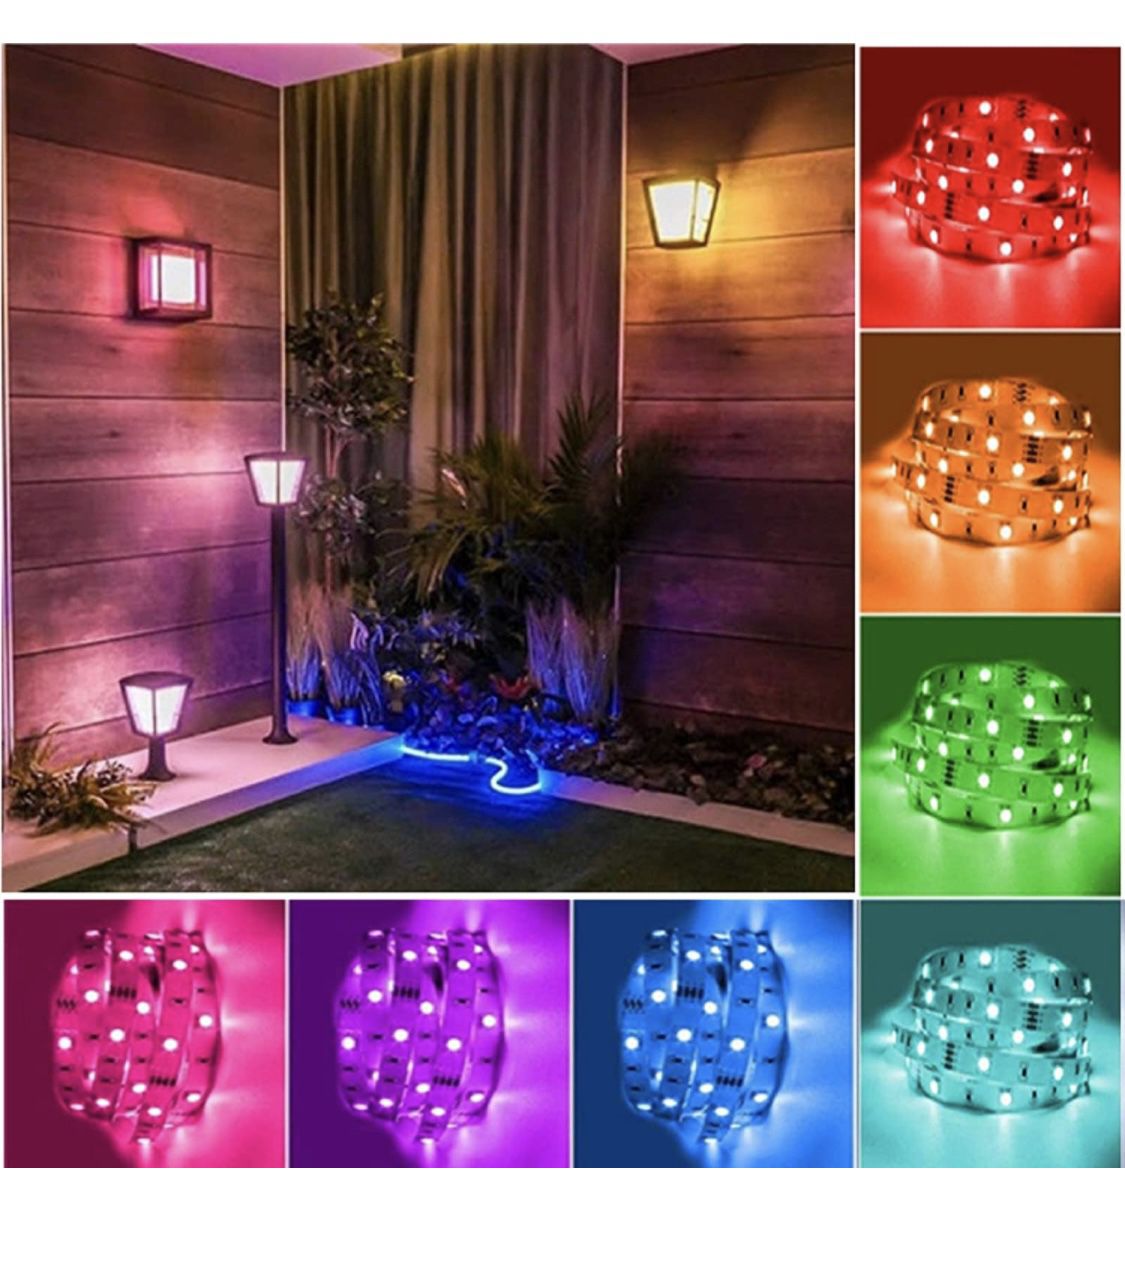 16.4ft Led Light Strip,Led Color Changing Lights with Remote,Mood Lighting for Bedroom, Gaming Desk,Gaming Chair,Room Decoration SMD 5050 Strip Lights